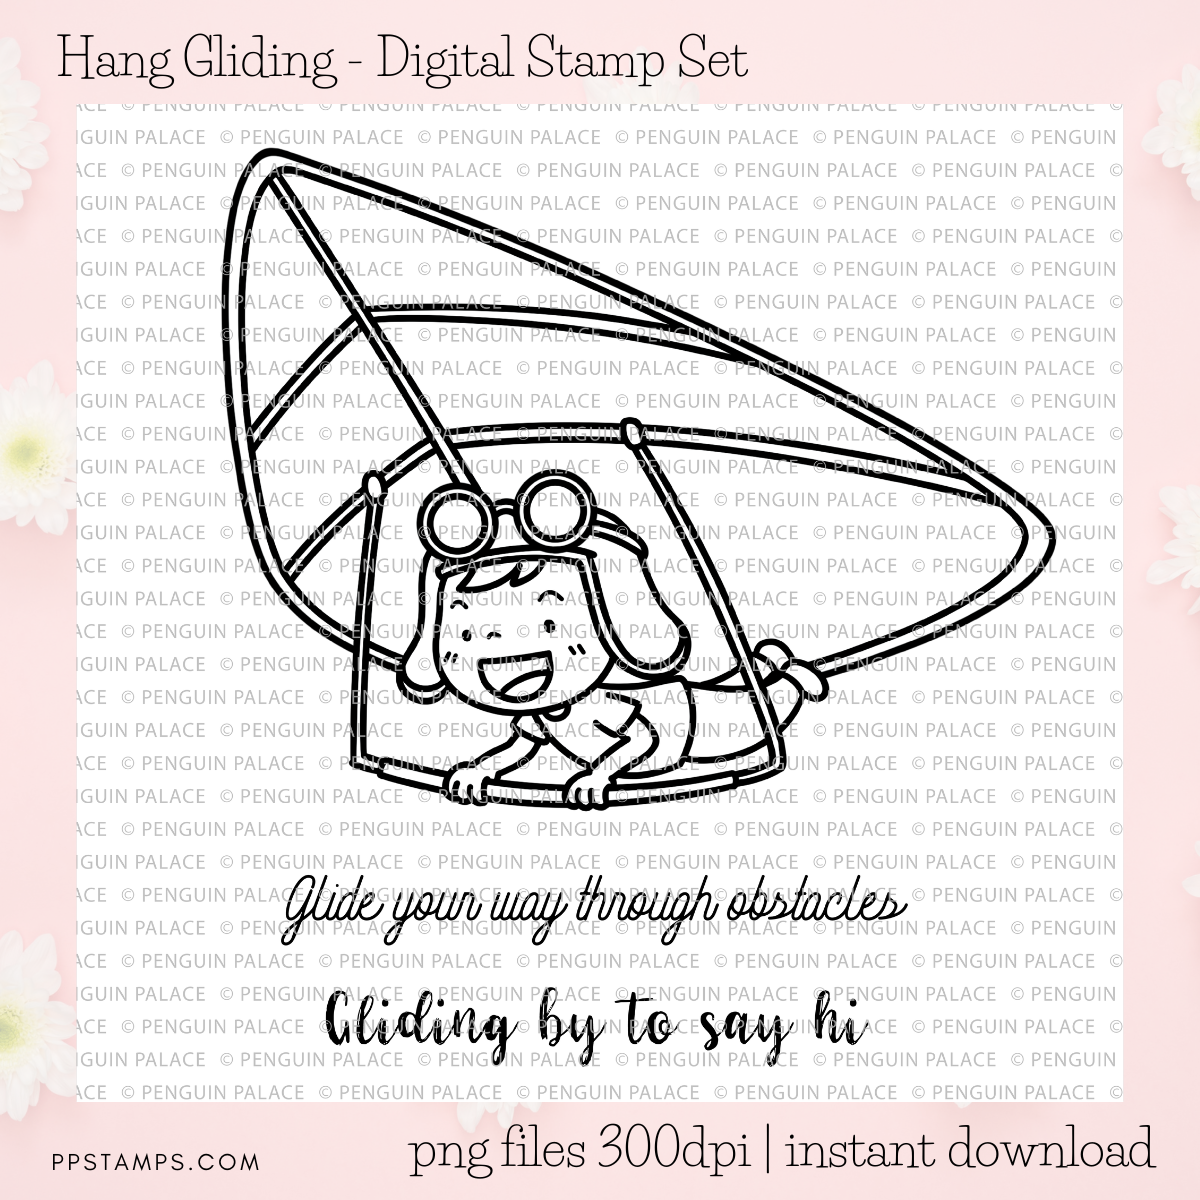 Hang Gliding - Digital Stamp